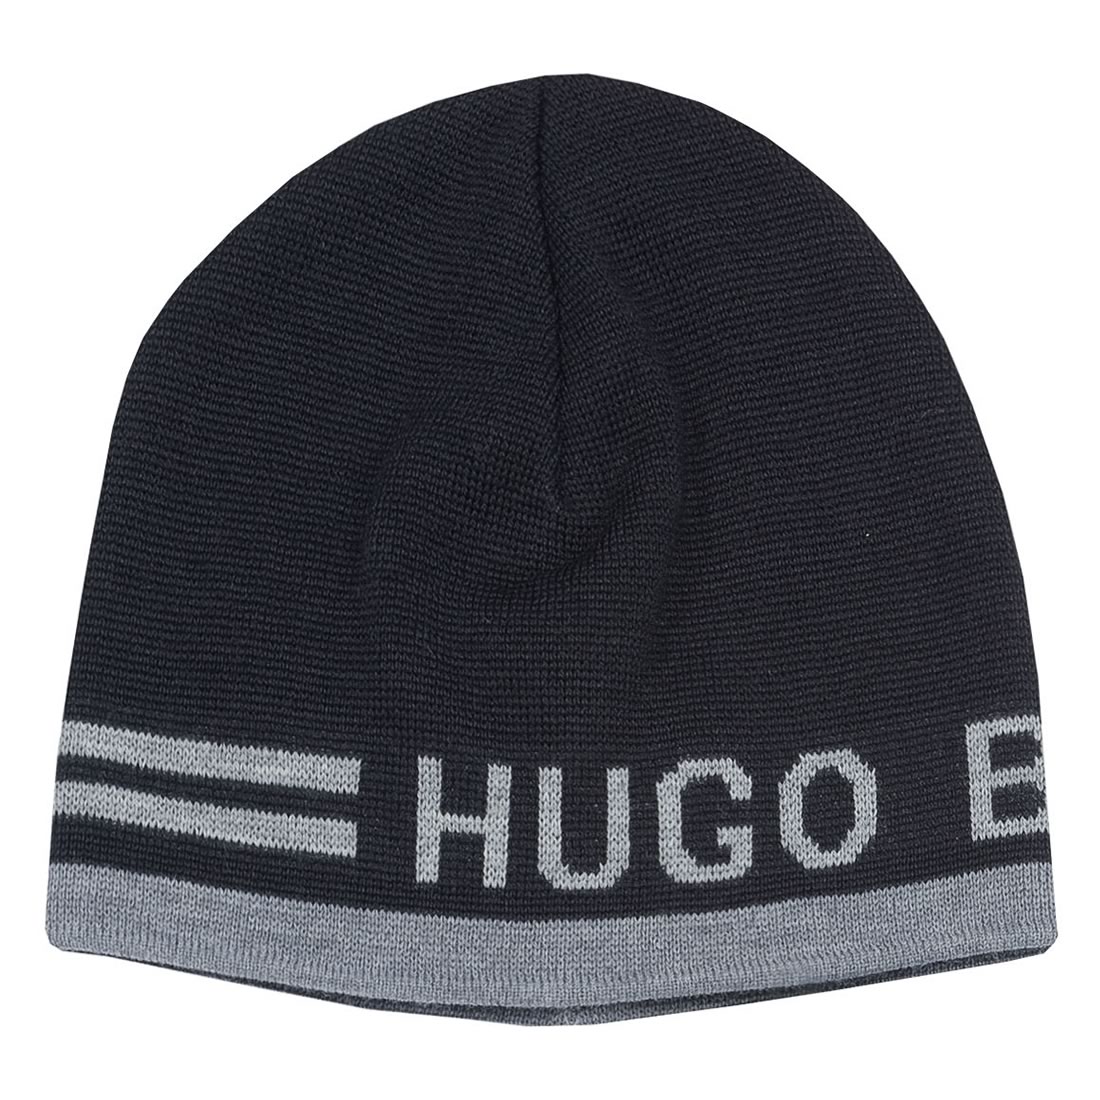 Hugo Boss Ciny Beanie Hat Black/Grey